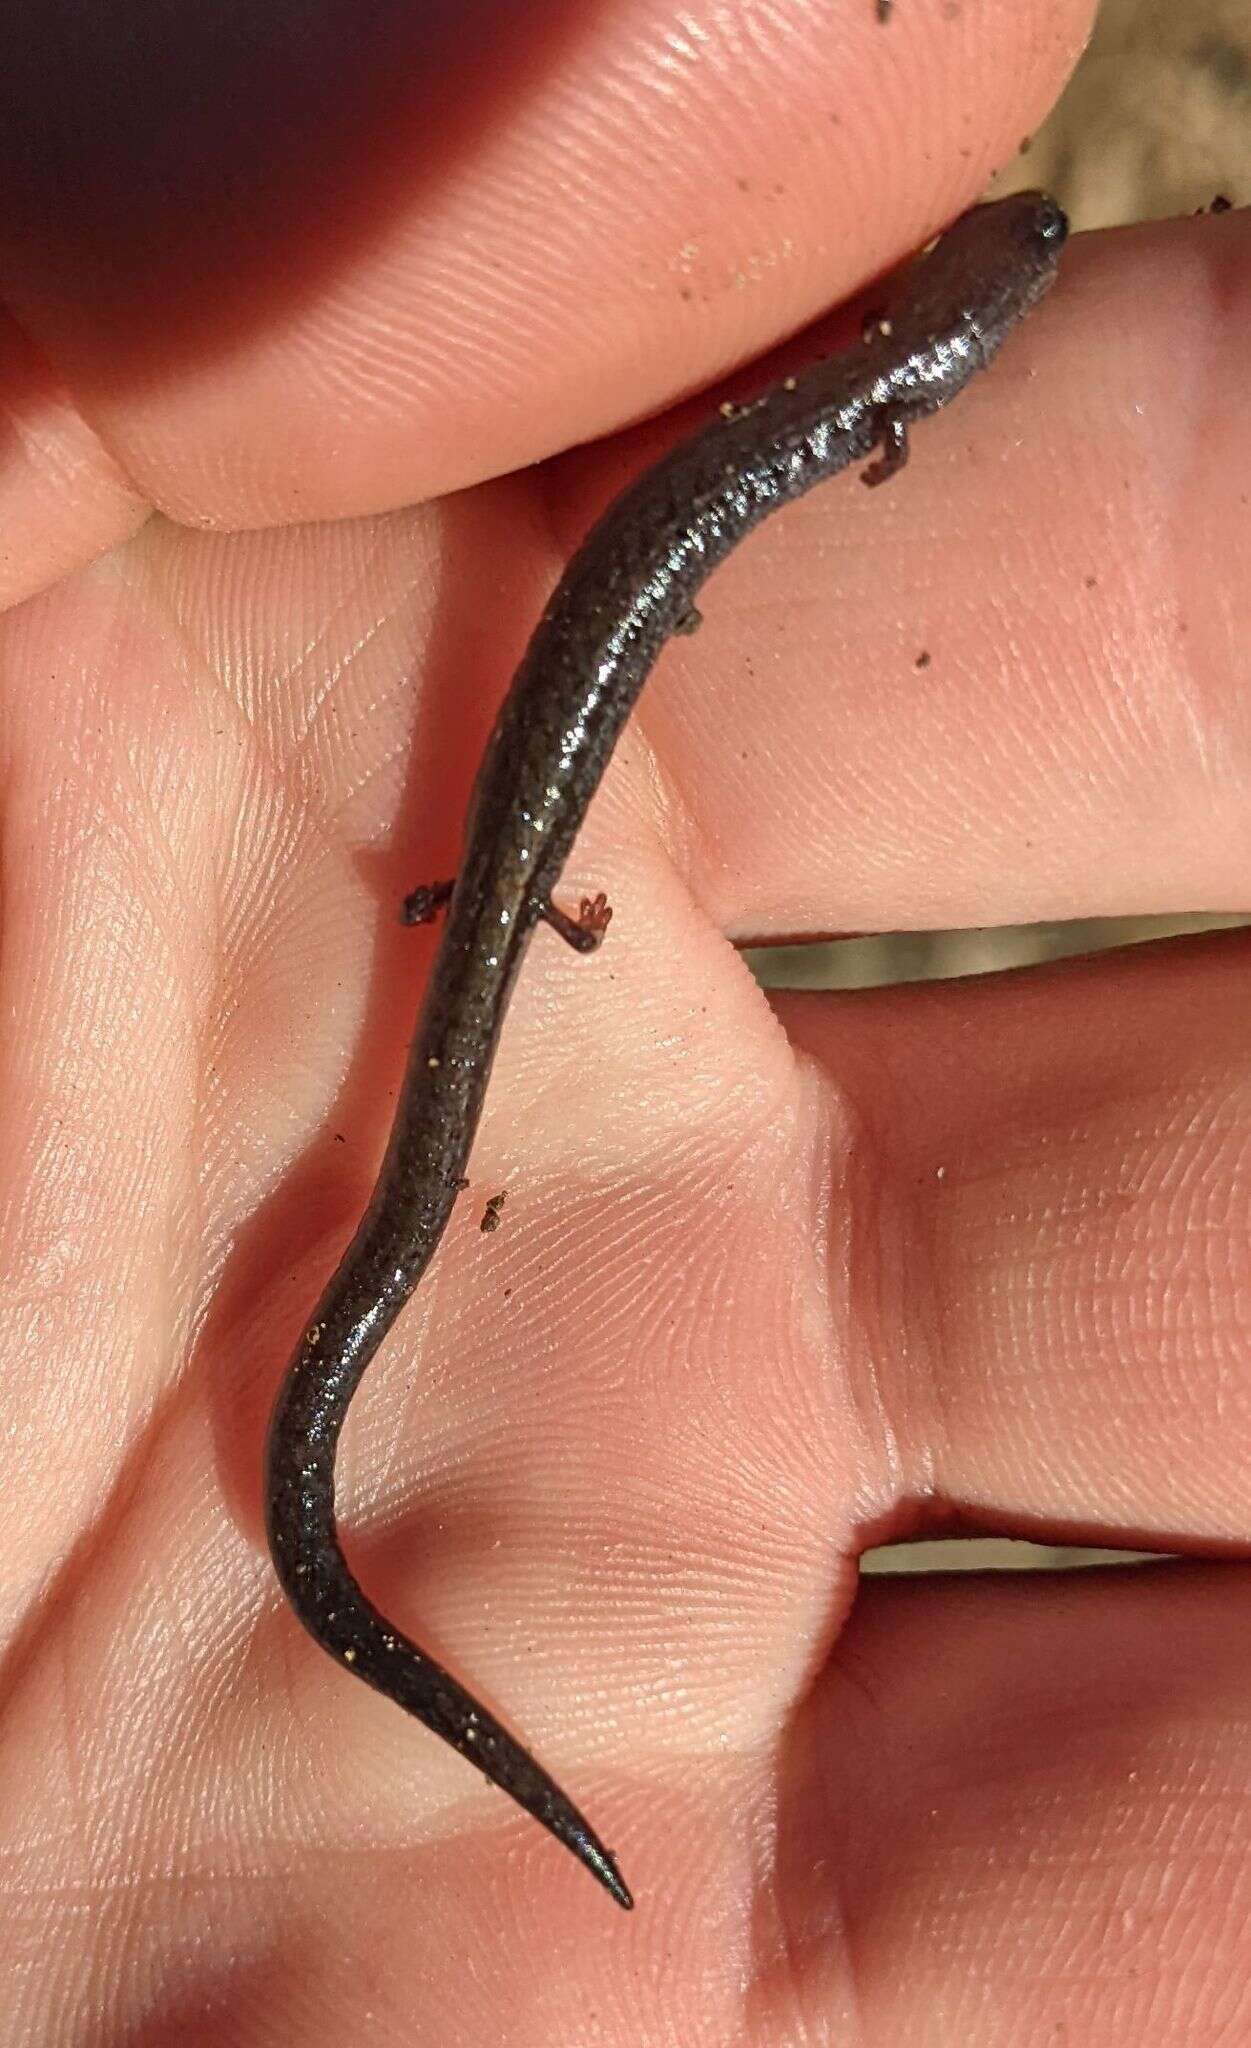 Image of San Simeon Slender Salamander